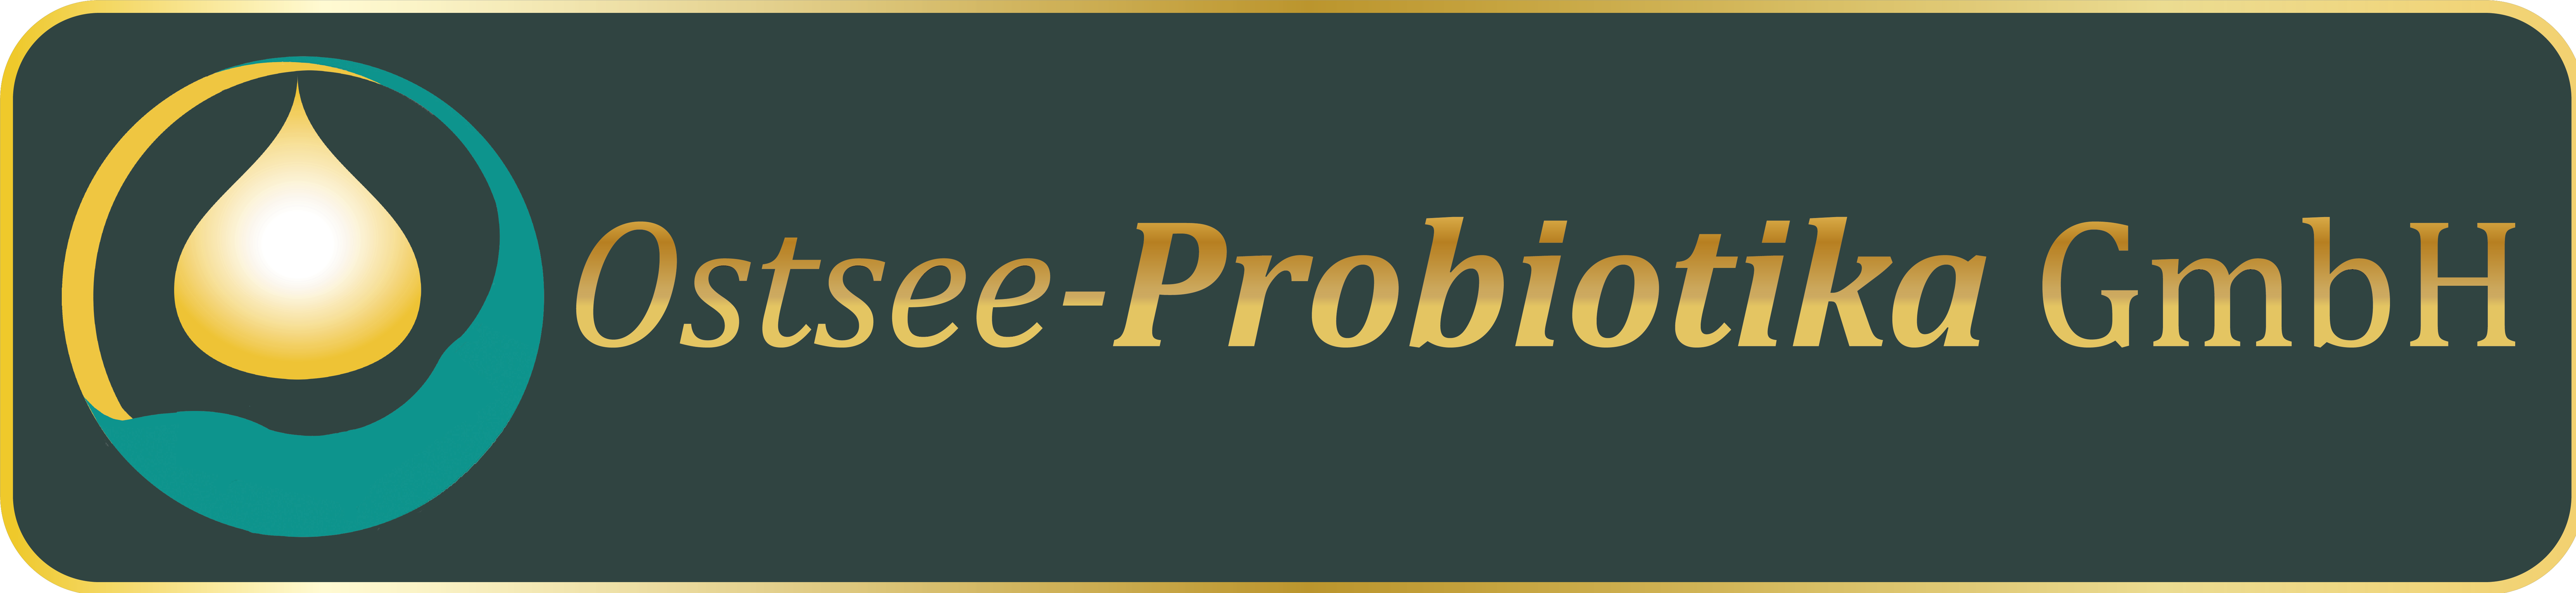 Logo Ostsee Probiotika